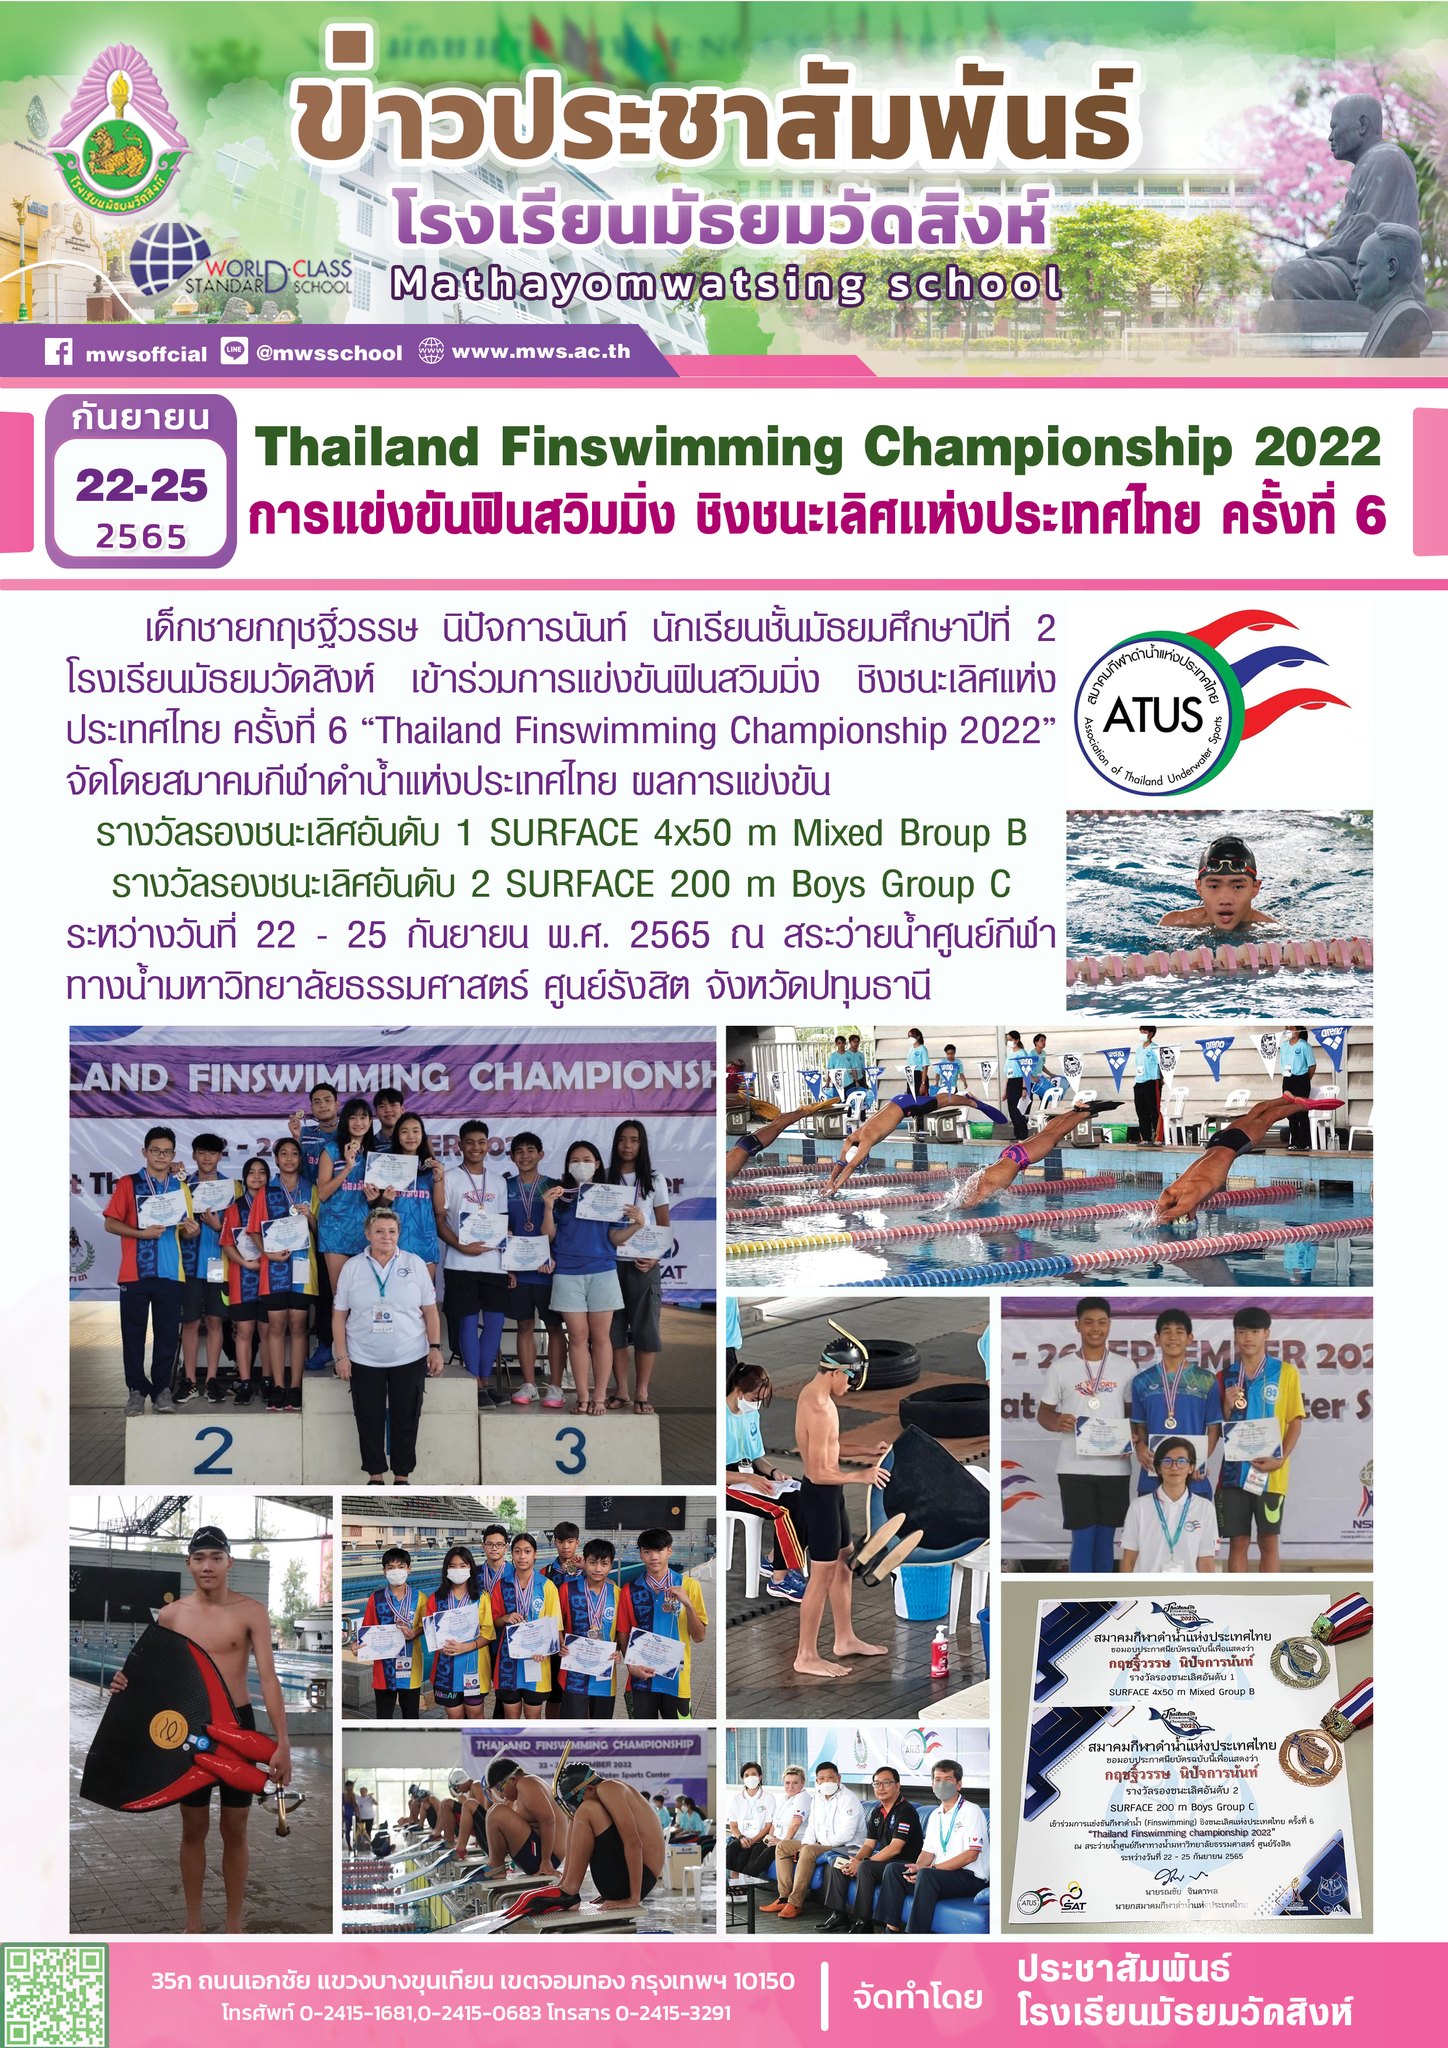 Thailand Finswimming Championship 2022